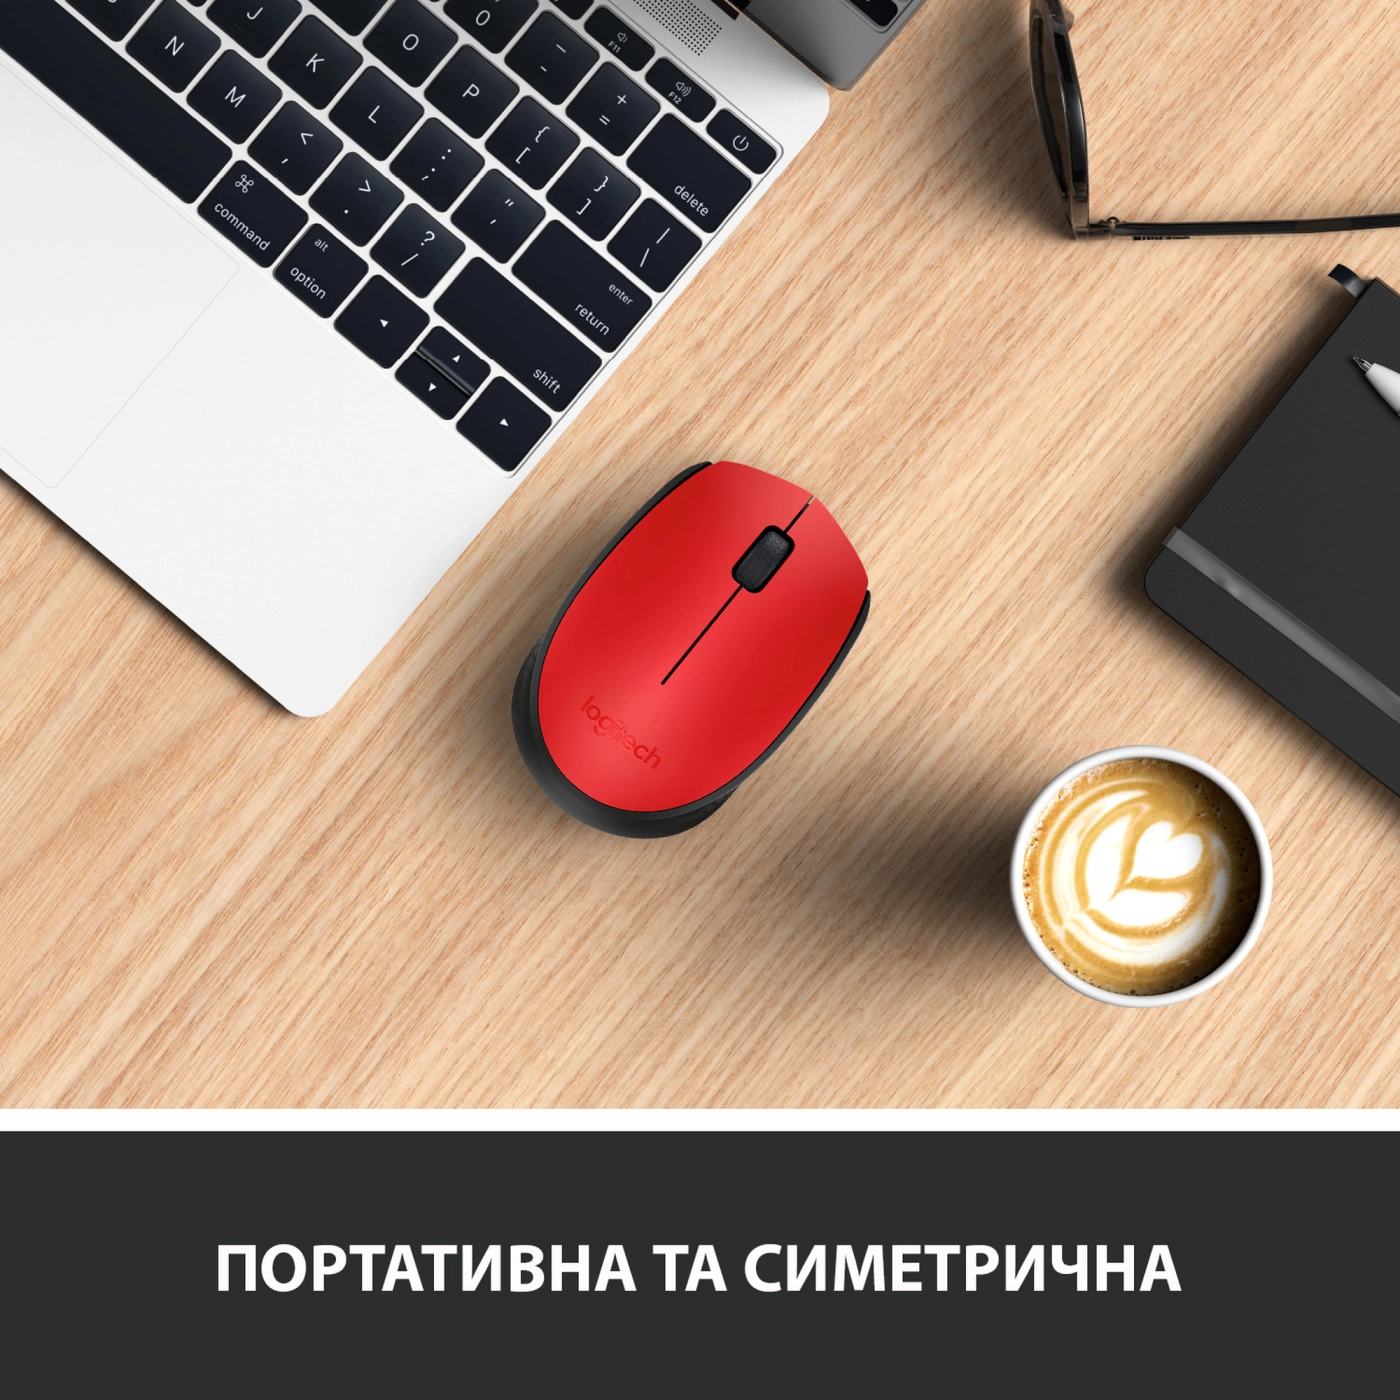 Купить Мышь Logitech Wireless Mouse M171 red (910-004641) - фото 3